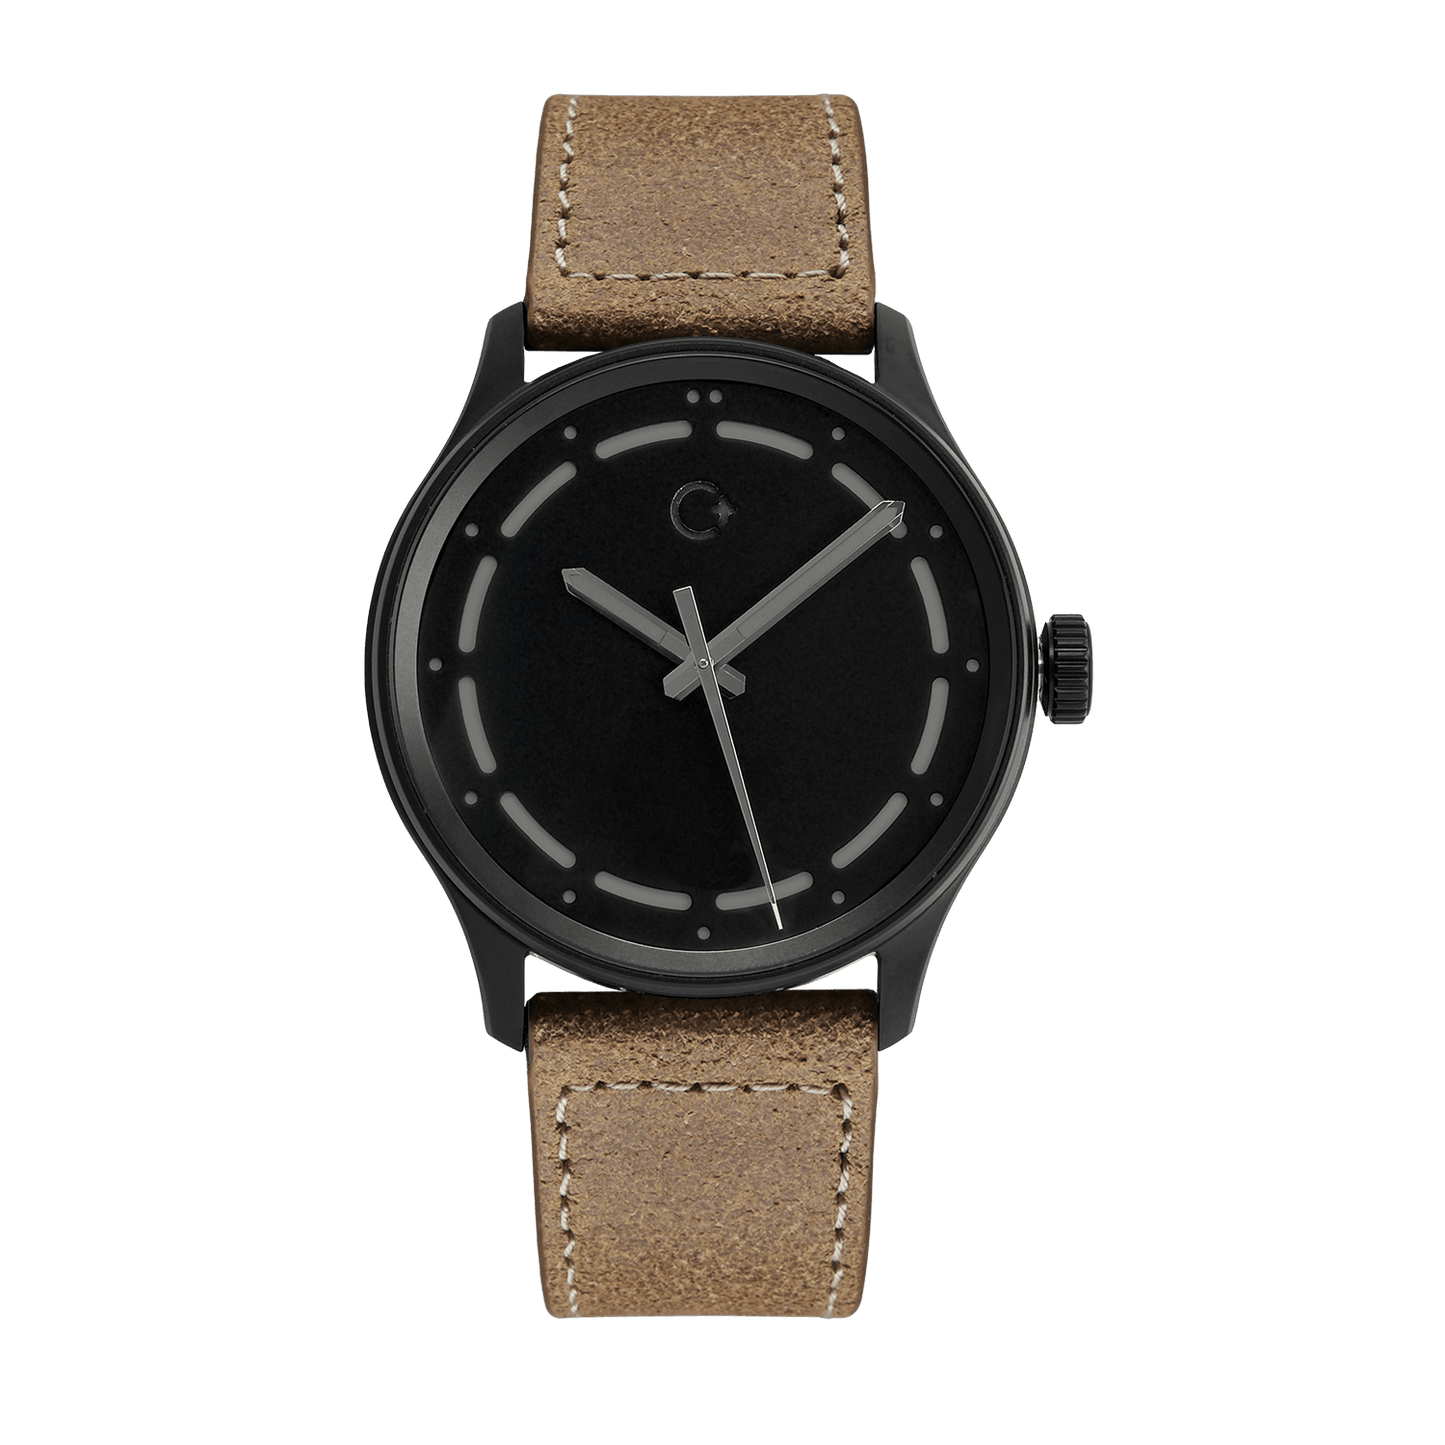 All Black NanoBlack hodinky Chronotechna, 42mm, Sellita SW200-1 strojekt, 100m vodotěsnost